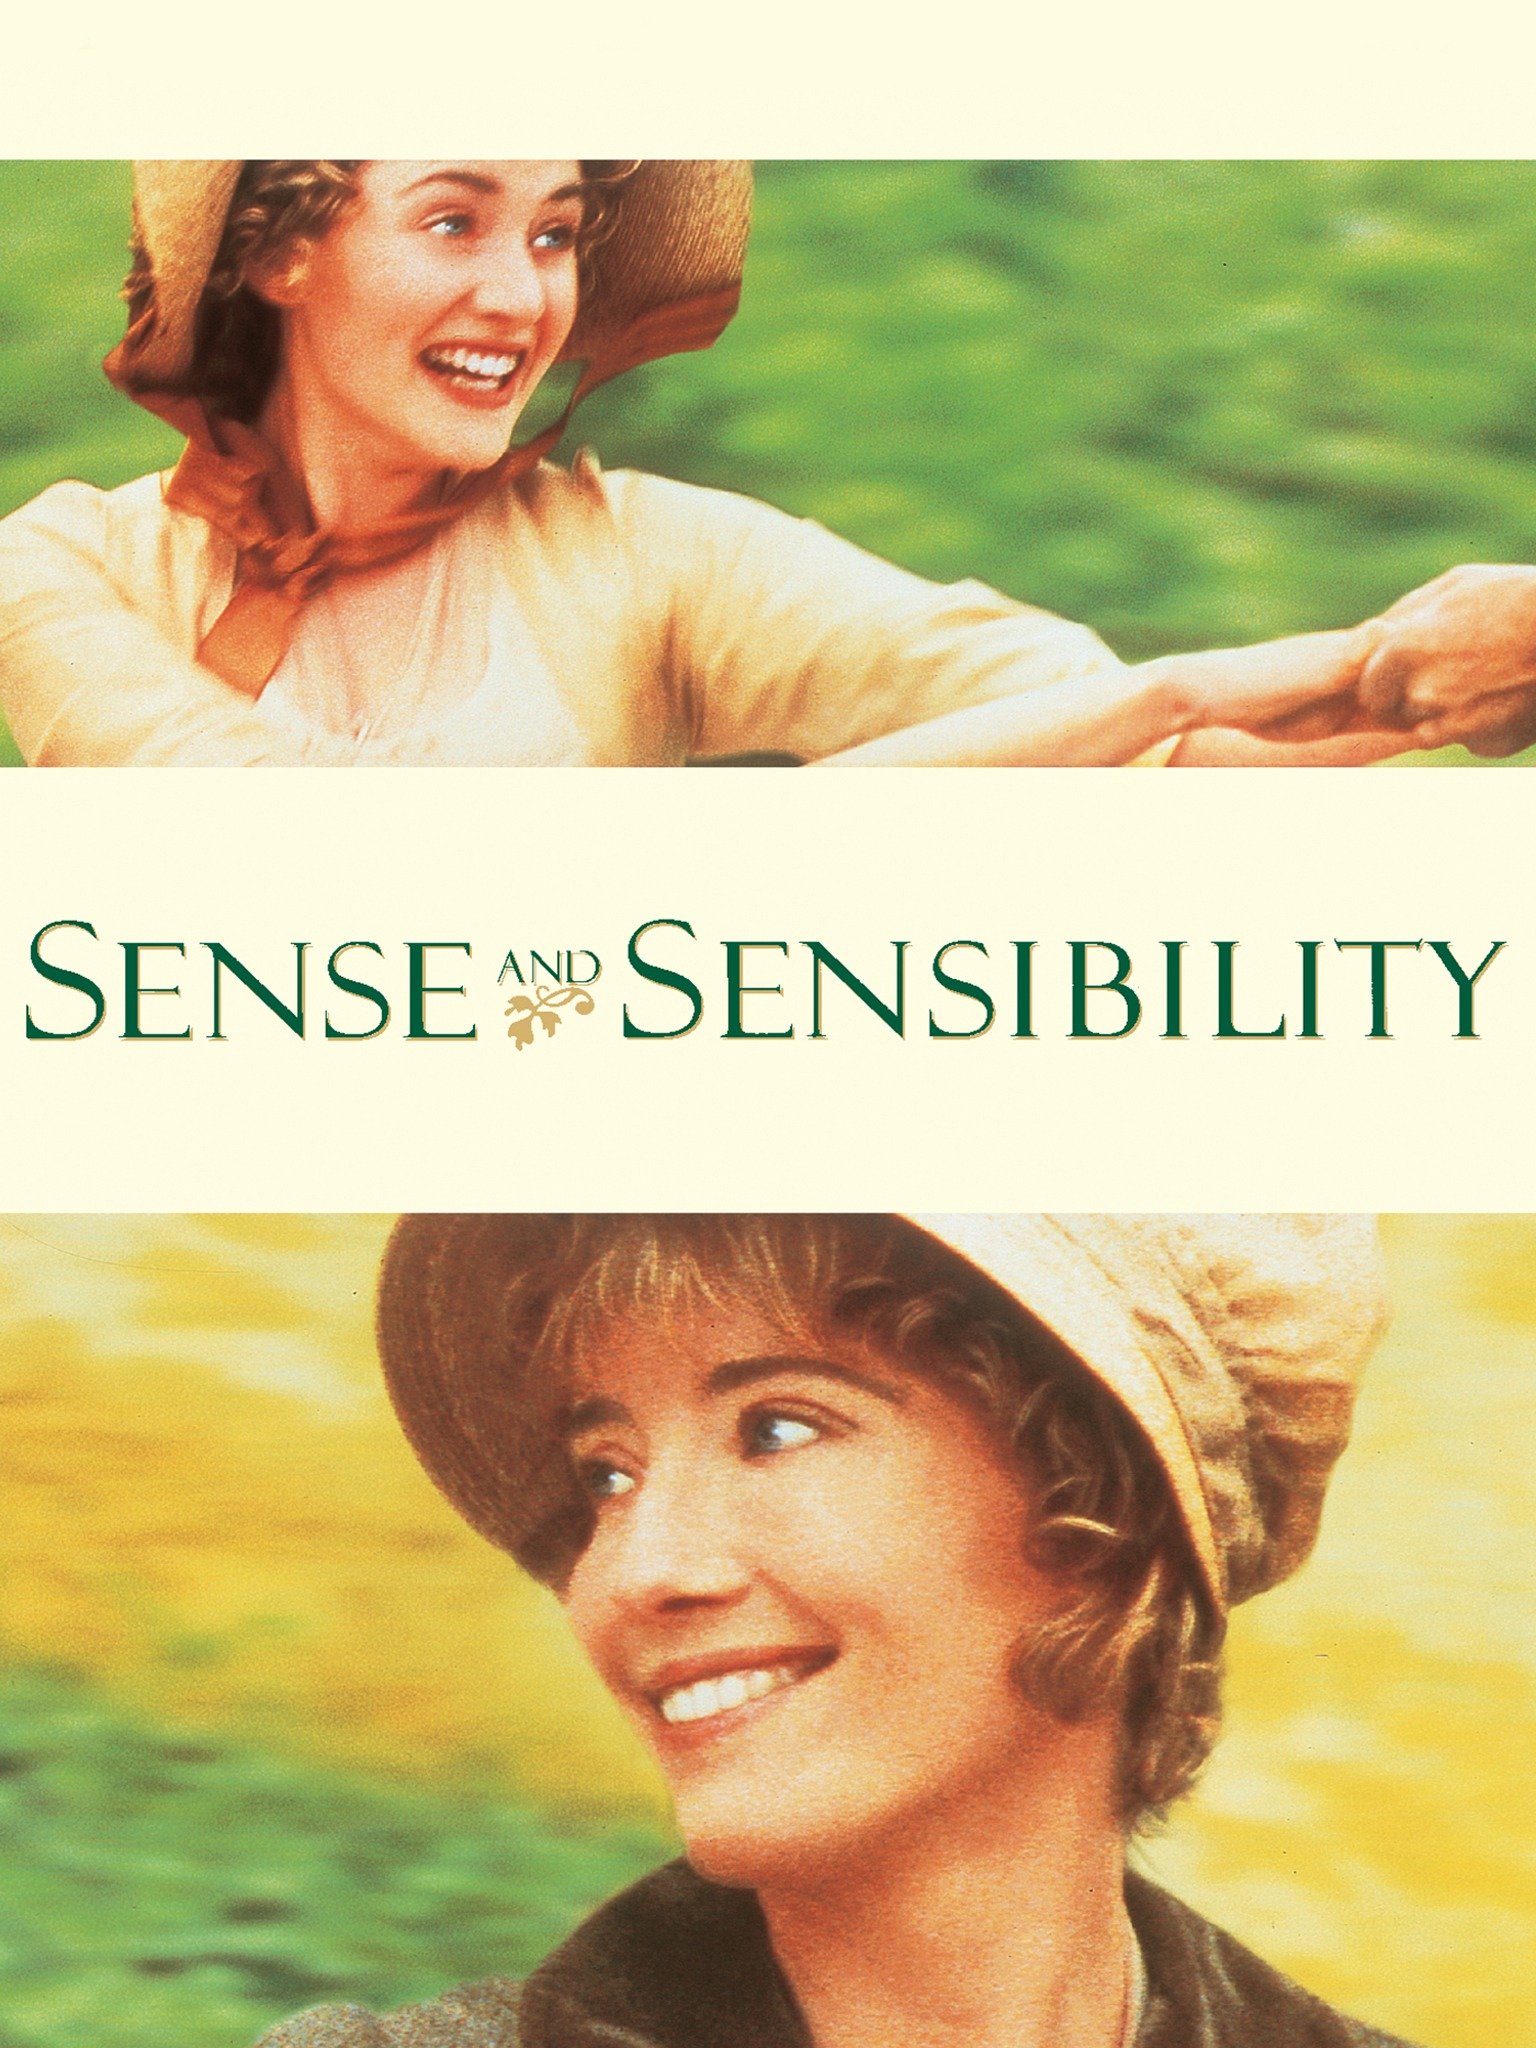 Sense and Sensibility - Wikipedia, la enciclopedia libre